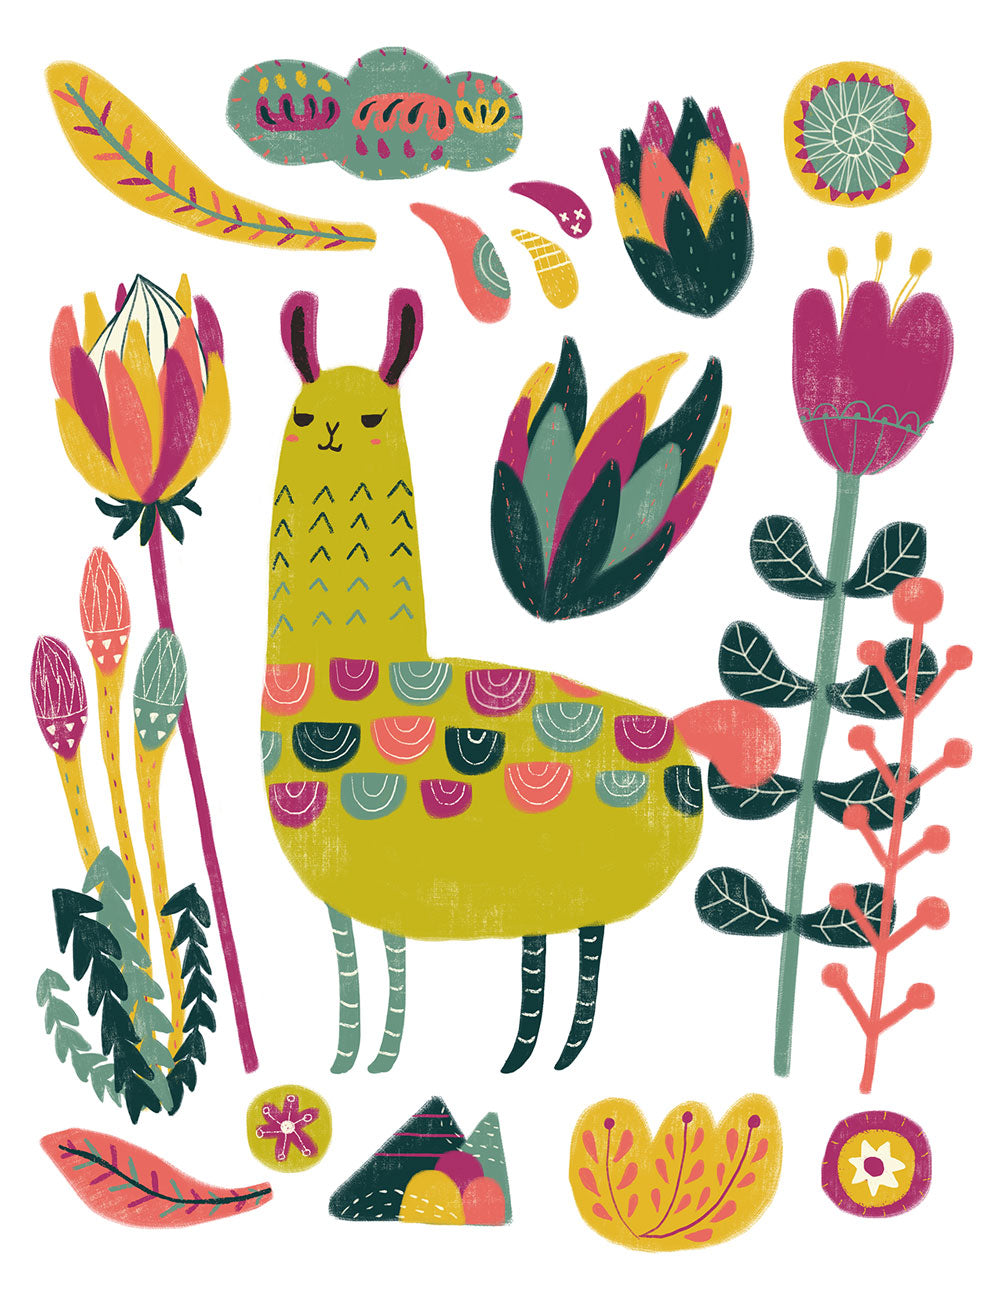 Llama Botanical Card